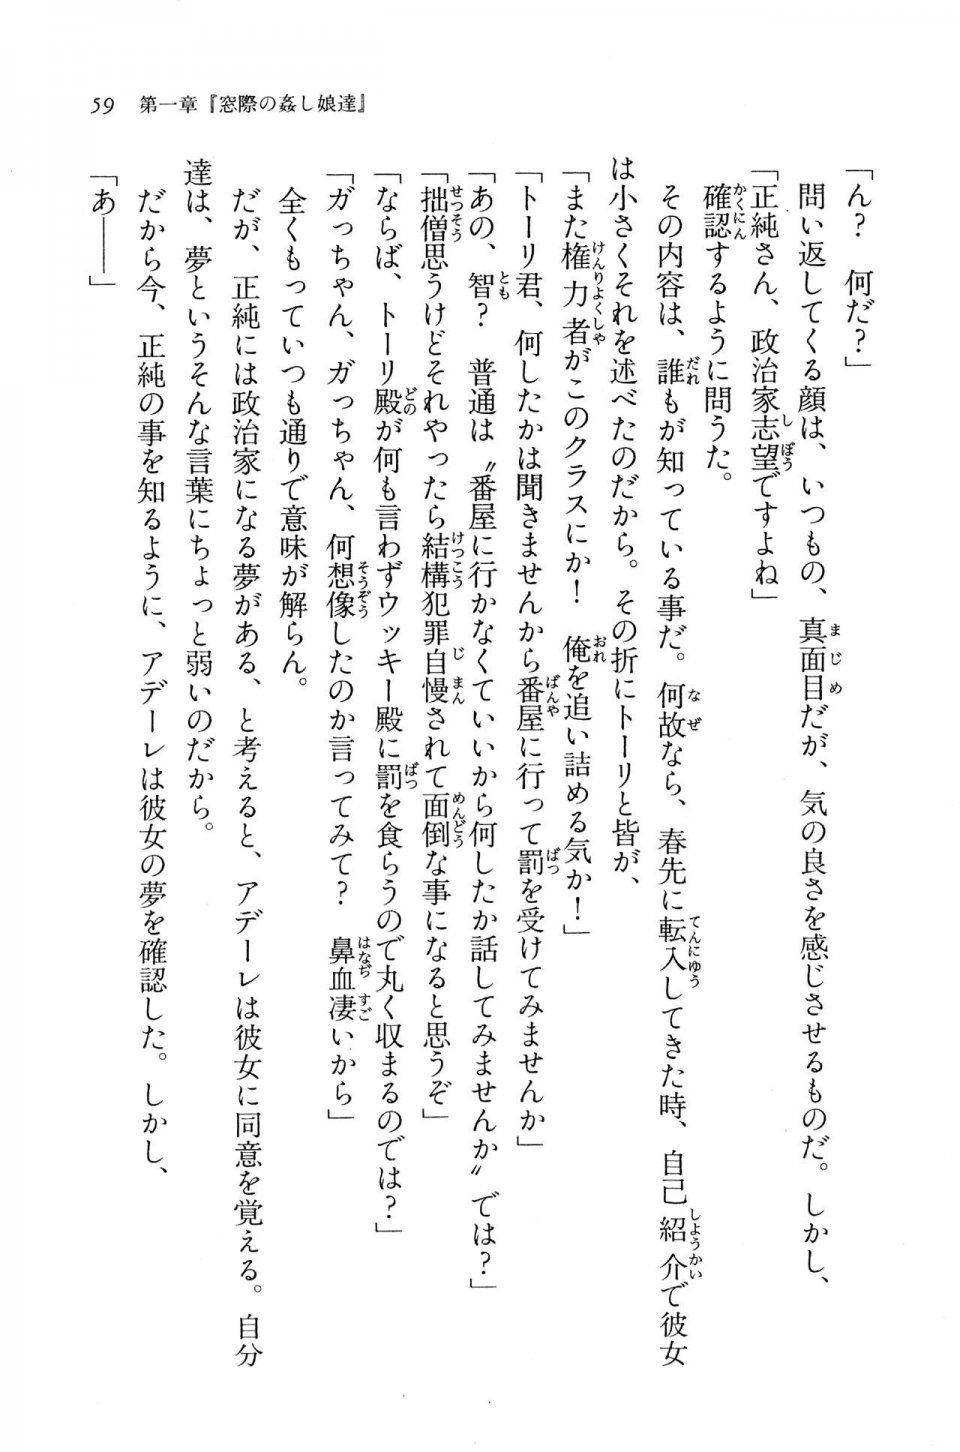 Kyoukai Senjou no Horizon BD Special Mininovel Vol 5(3A) - Photo #63